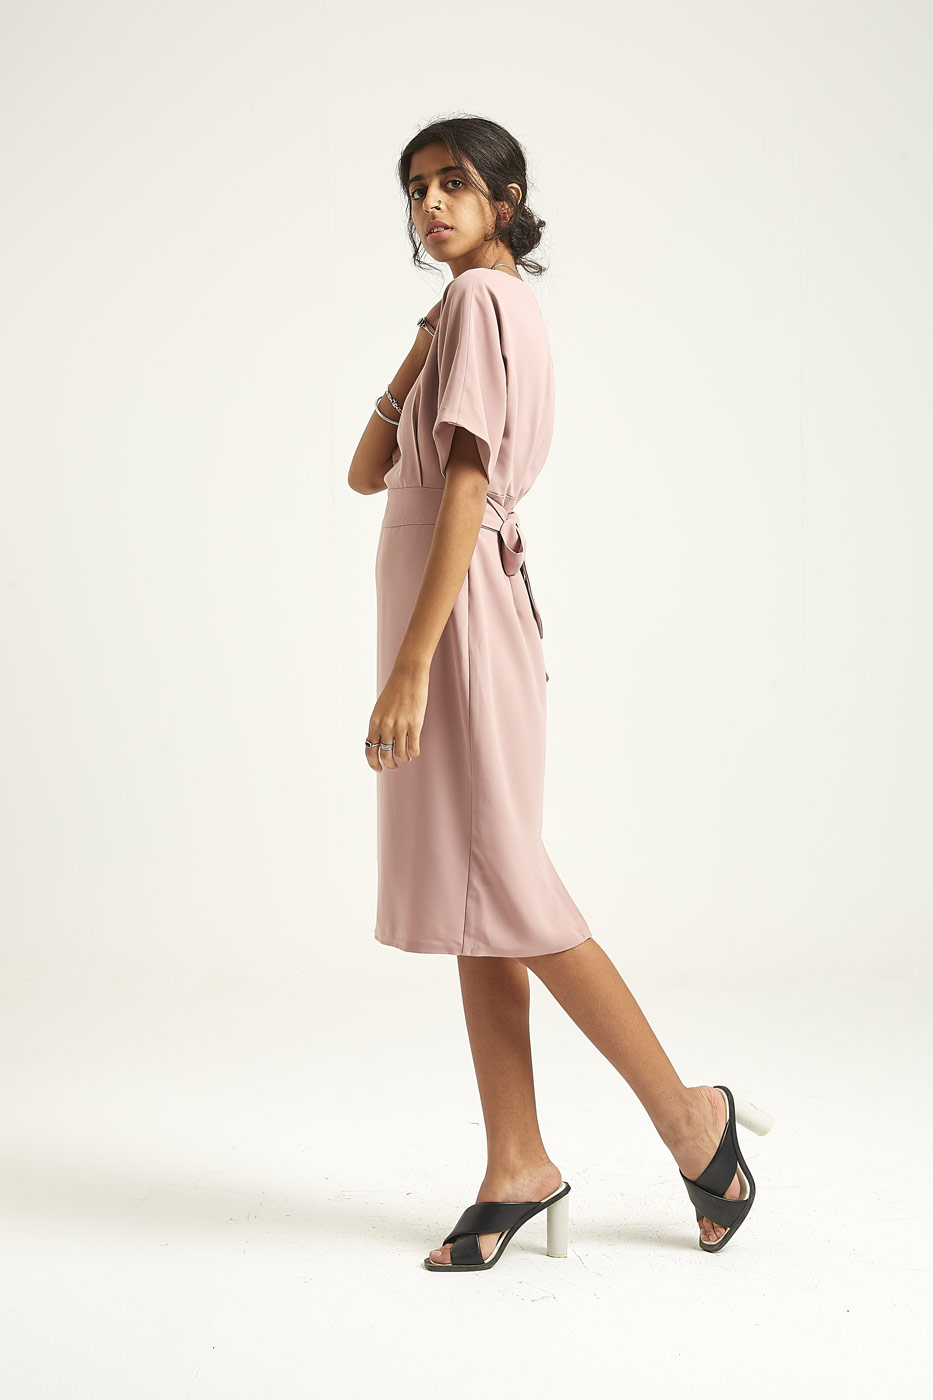 Buy Sweet Pink Dress from DressCode - Egypt